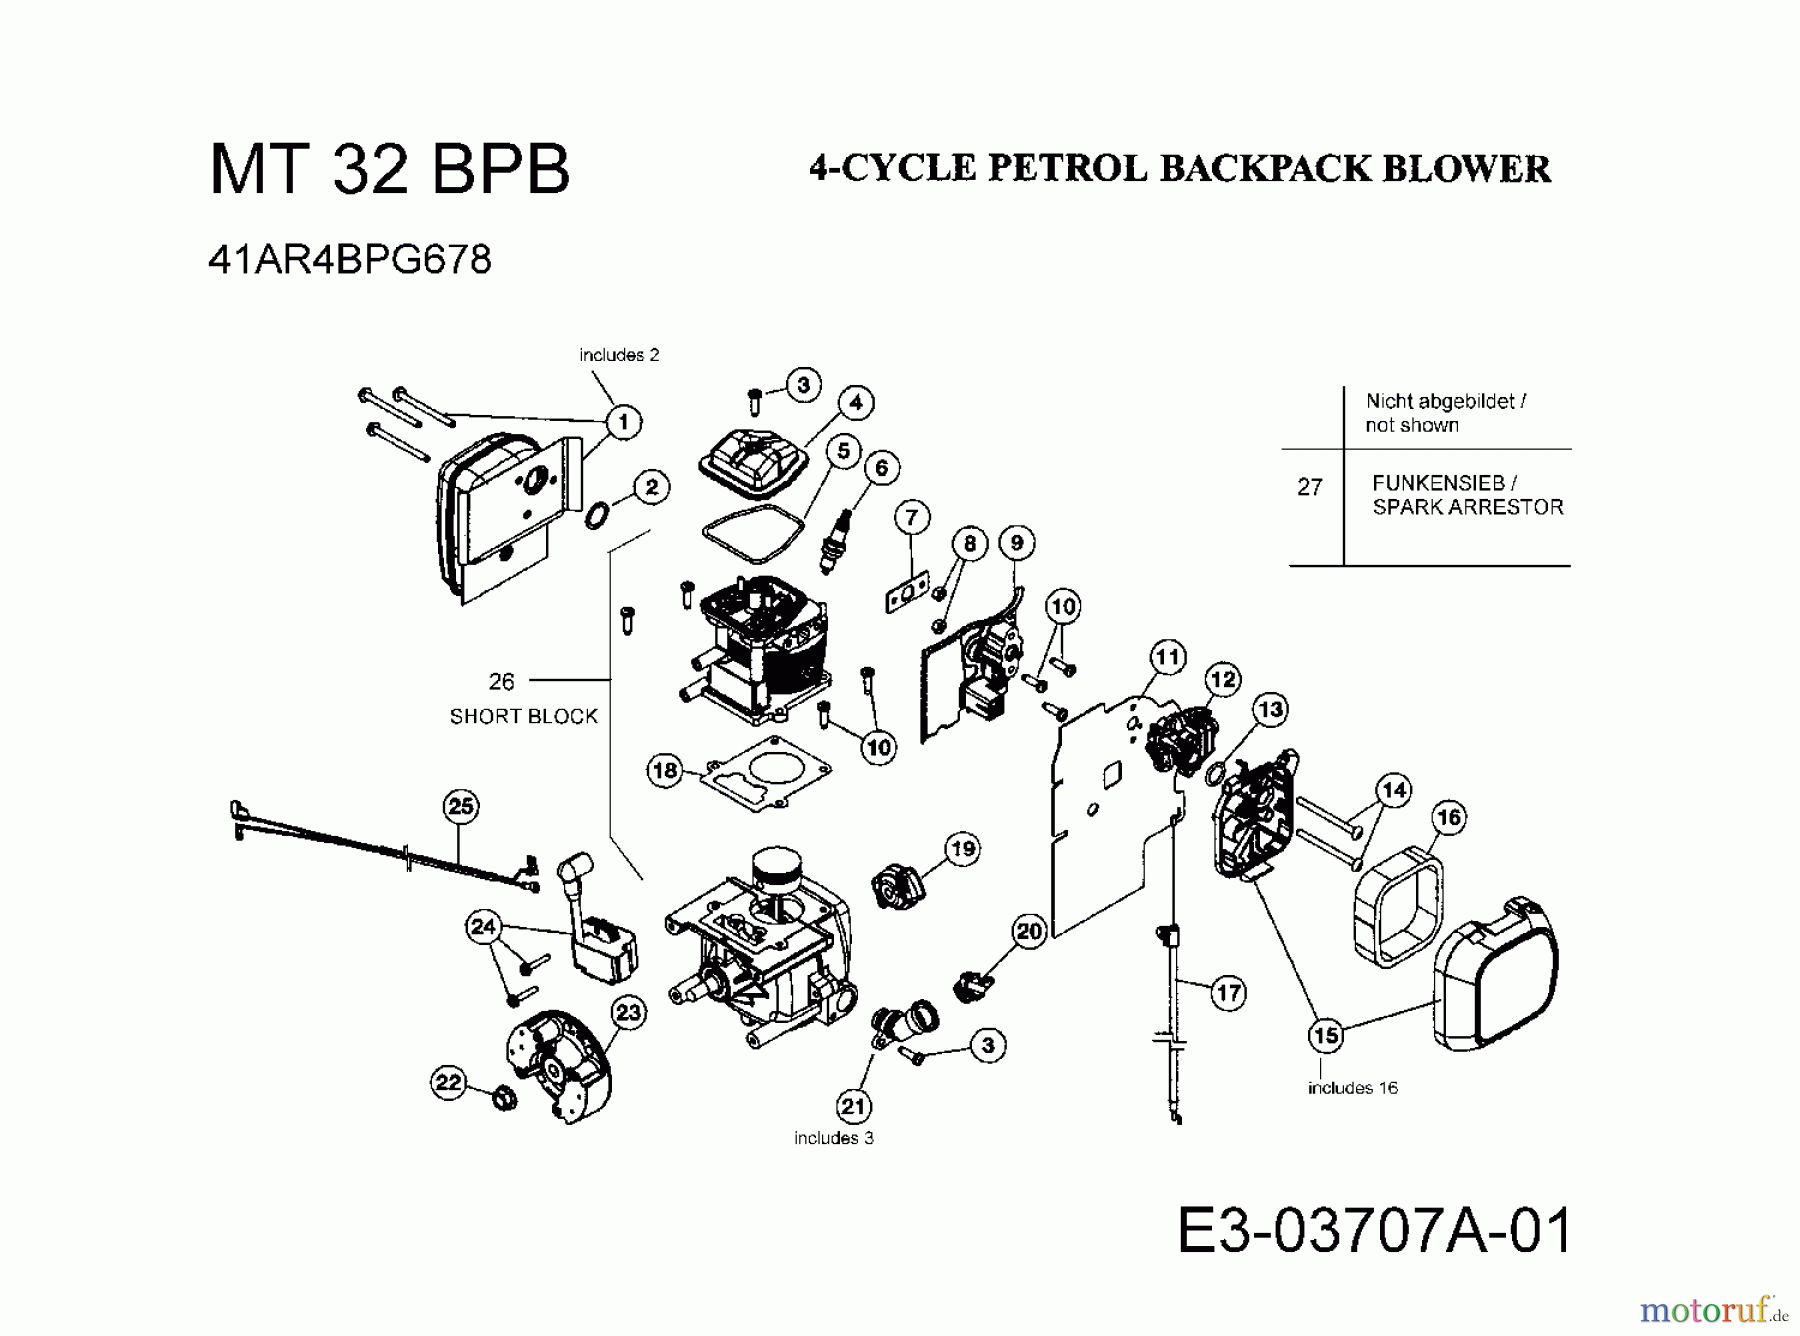  MTD Laubläser, Laubsauger MT 32 BPB 41AR4BPG678  (2008) Motor